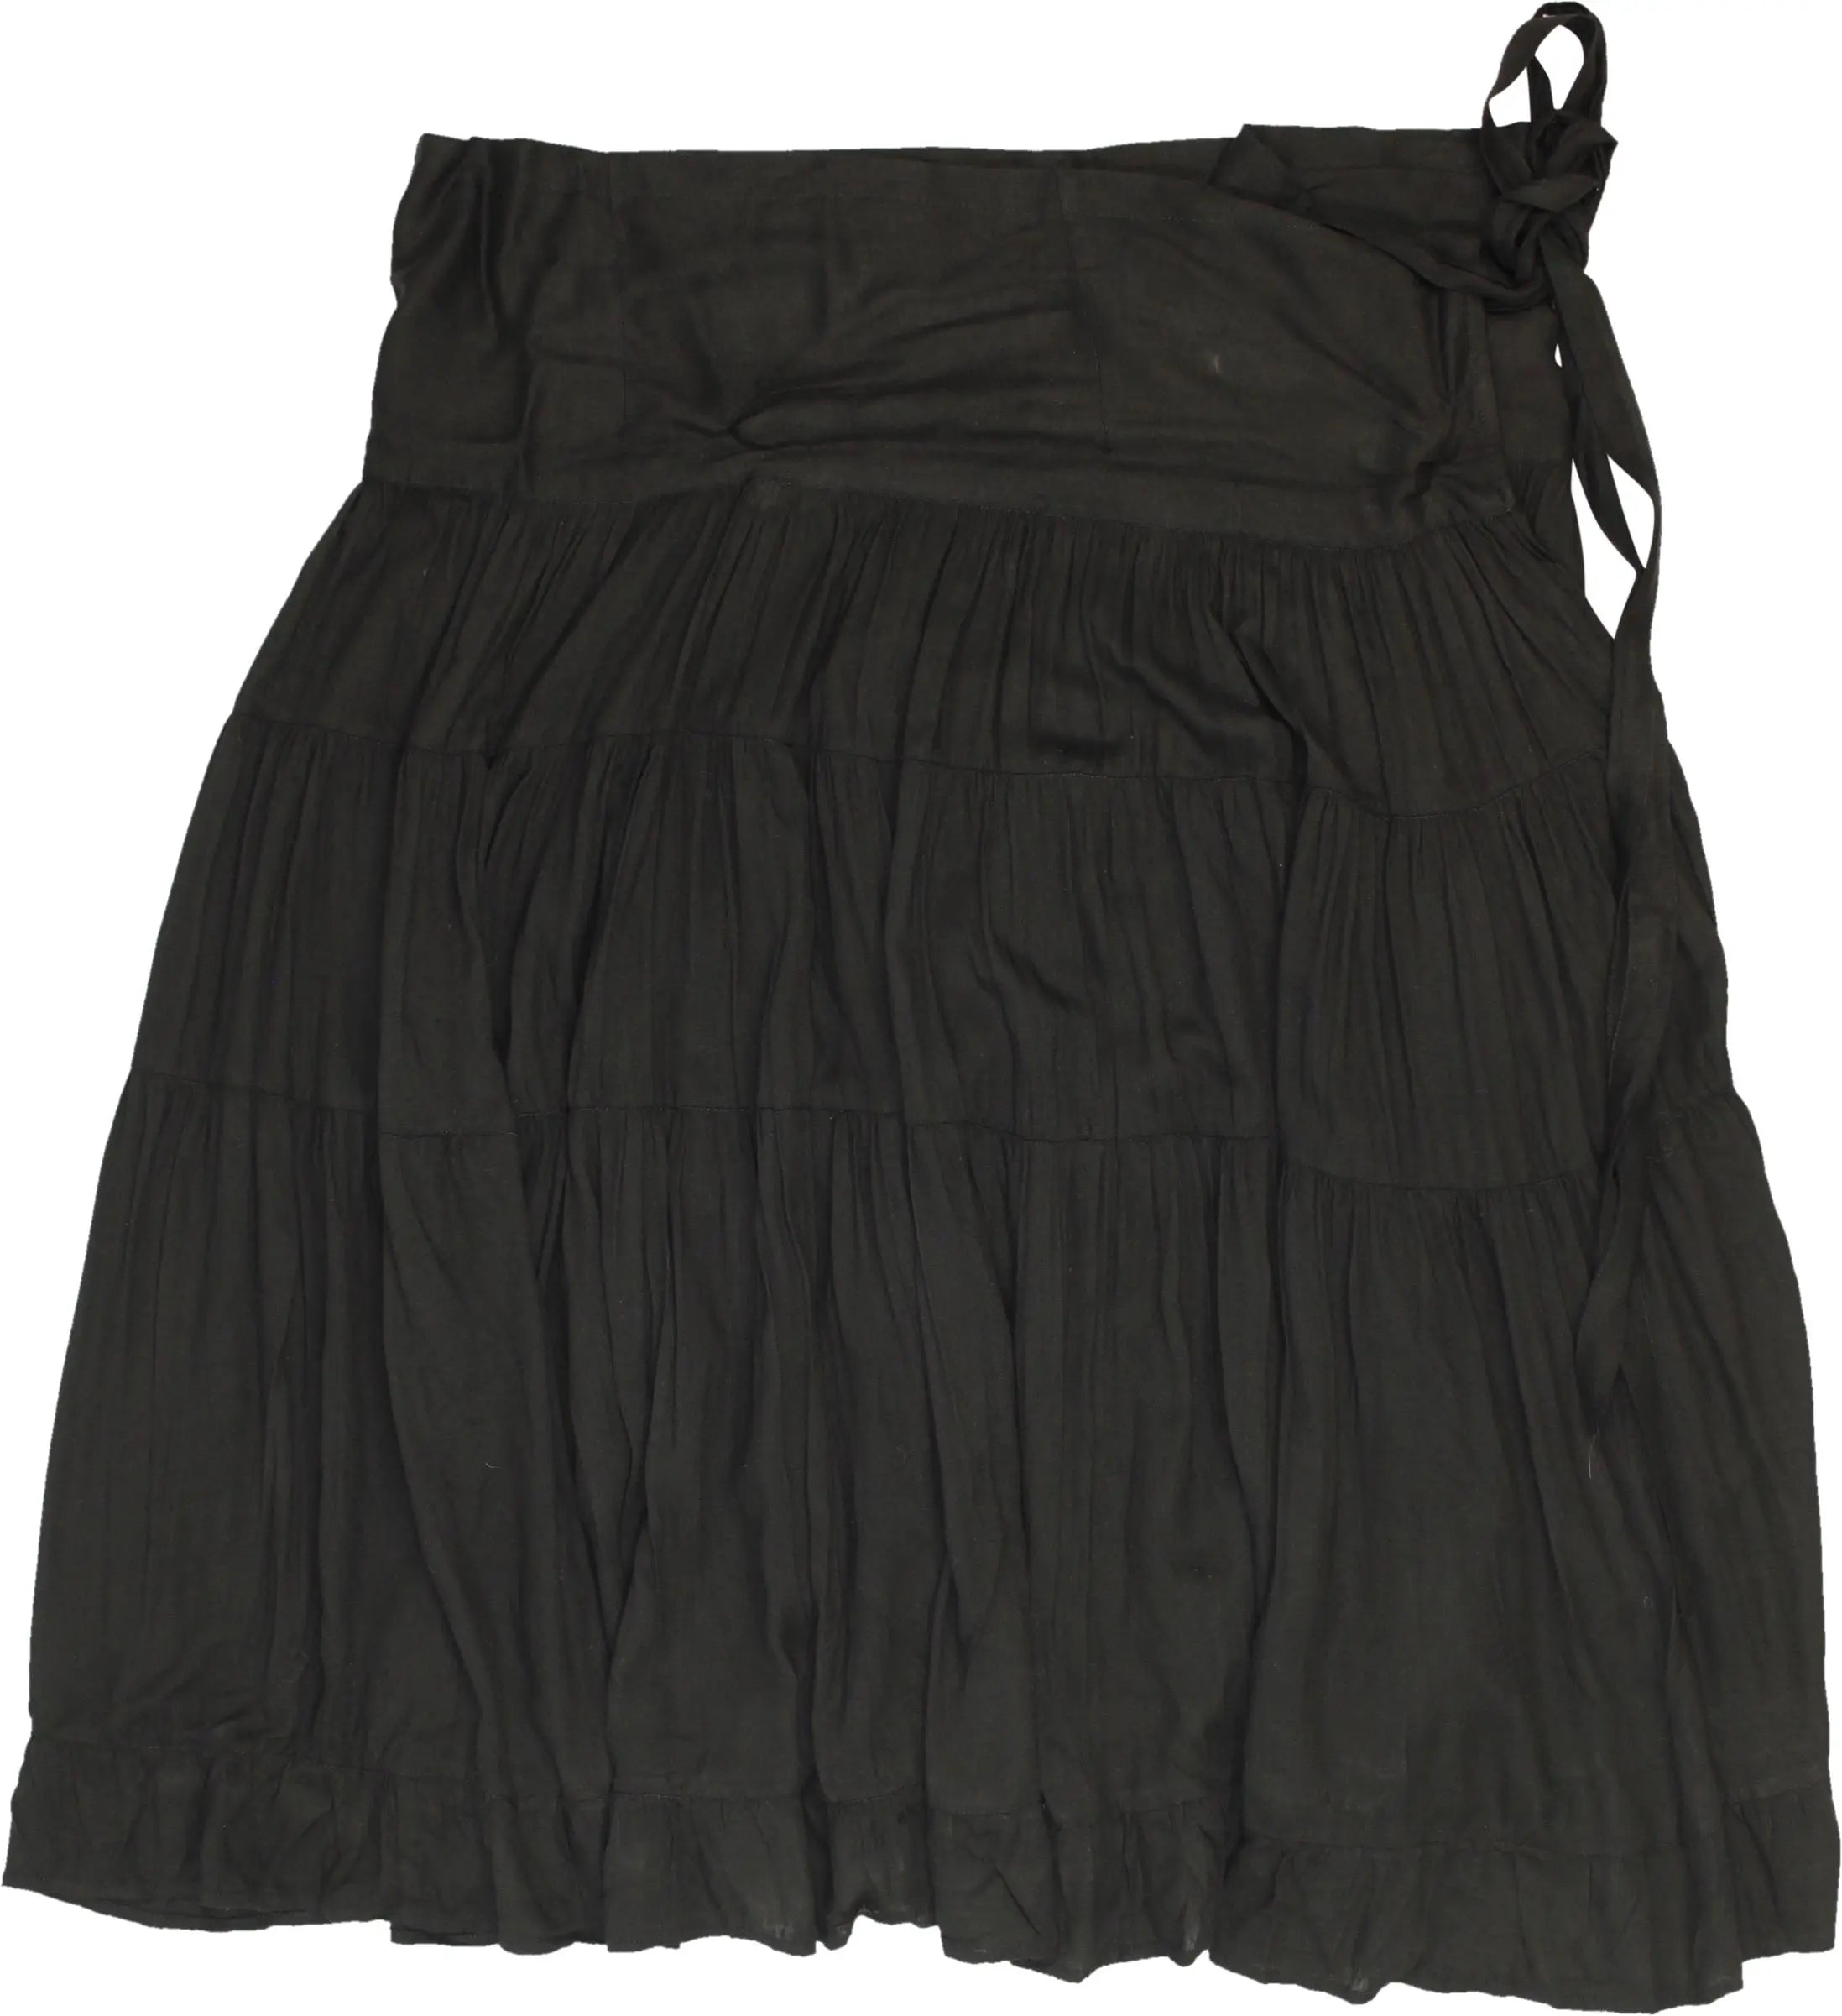 Casual Batik - Black Wrap Skirt- ThriftTale.com - Vintage and second handclothing